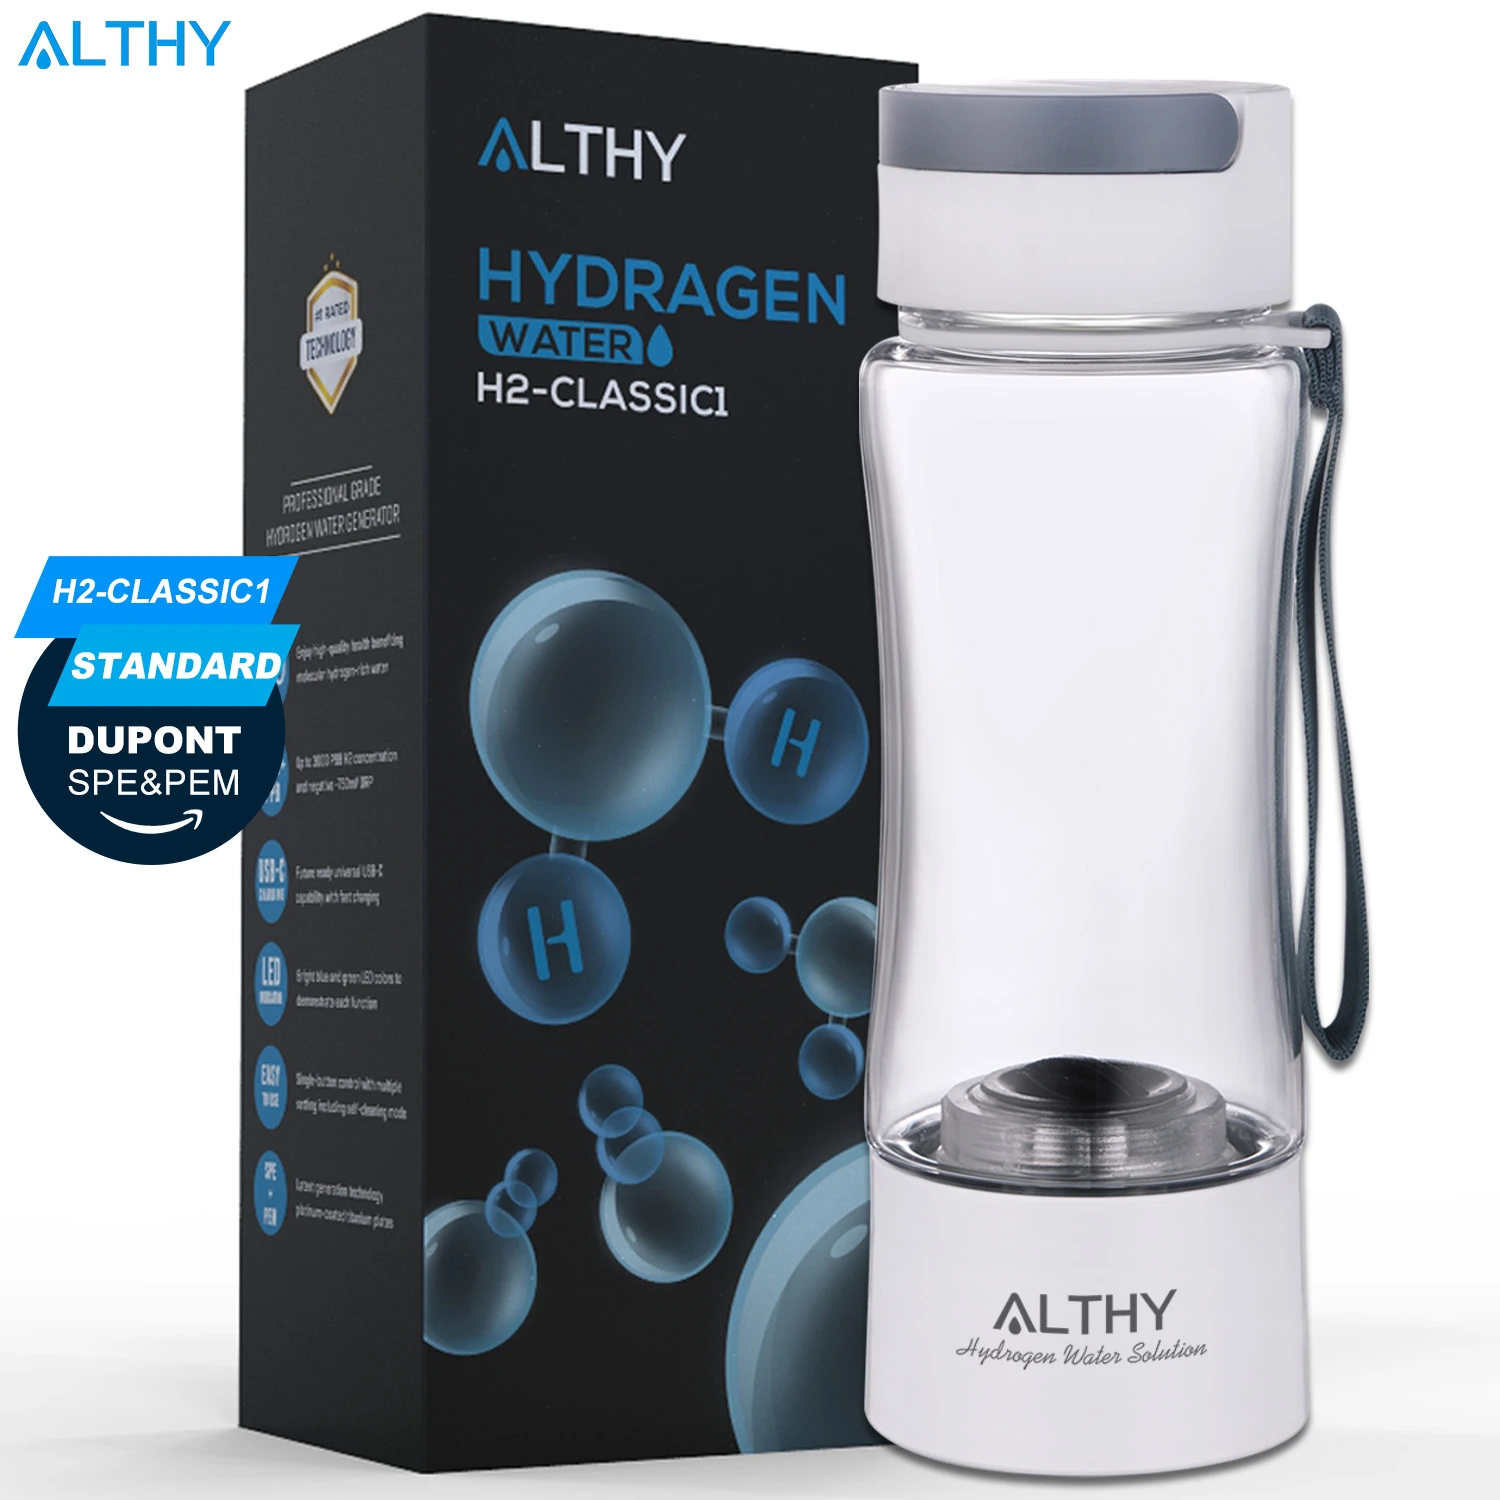 ALTHY Hydrogen Rich Water Generator Bottle - Tritan/Glass Cup - DuPont SPE PEM Dual Chamber Maker lonizer - H2 Inhalation device